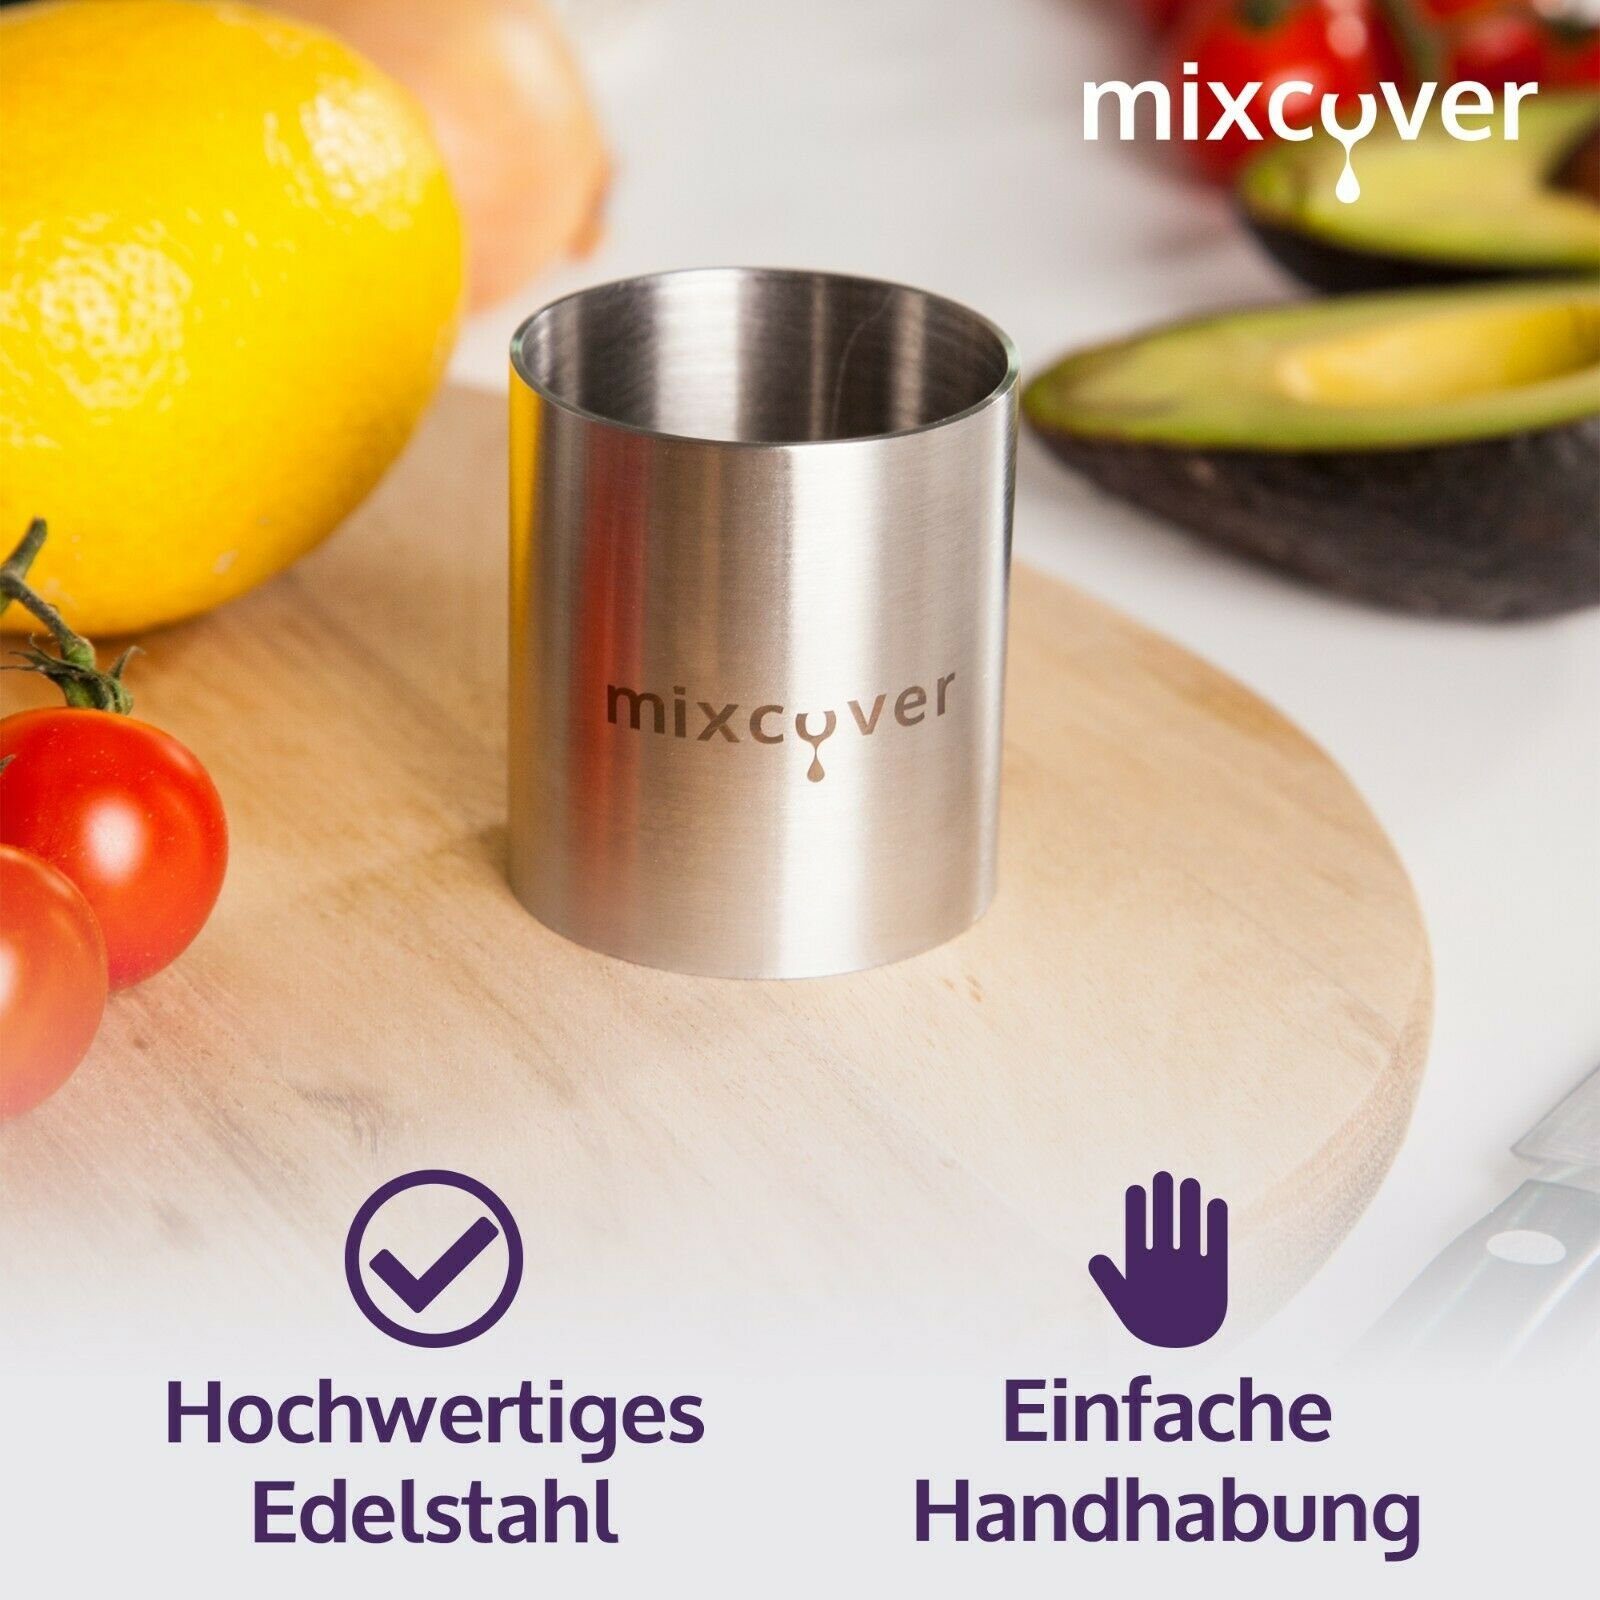 mixcover TM6 Cuisine Dampfkamin Thermomix Varoma Monsieur TM31 Küchenmaschinen-Adapter Friend Connect Cookit Bosch TM5 Mixcover für